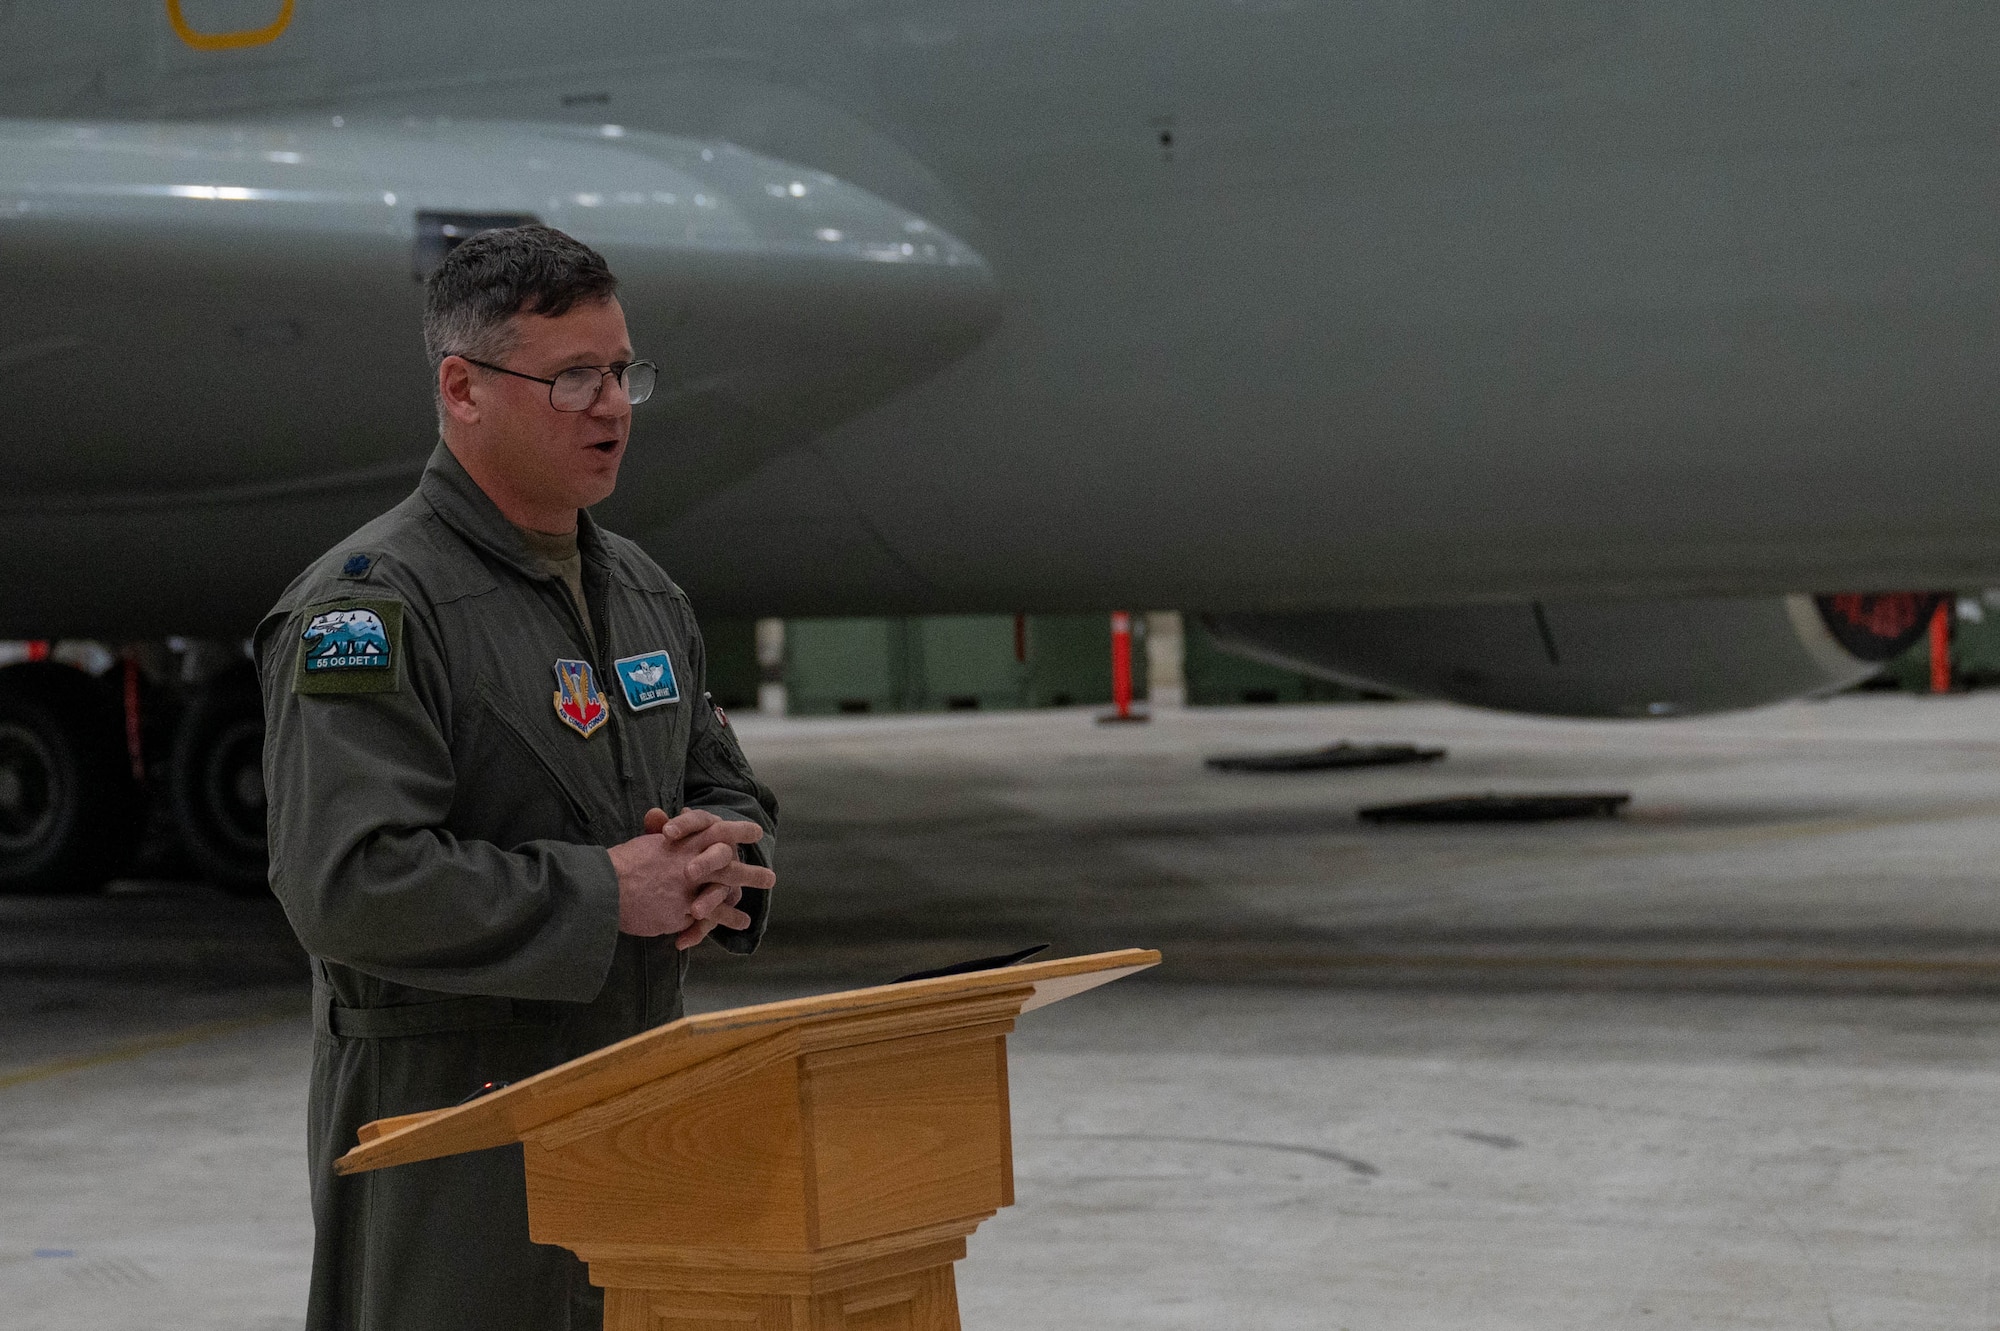 An Airman gives a speech during an assumption-of-command ceremony.